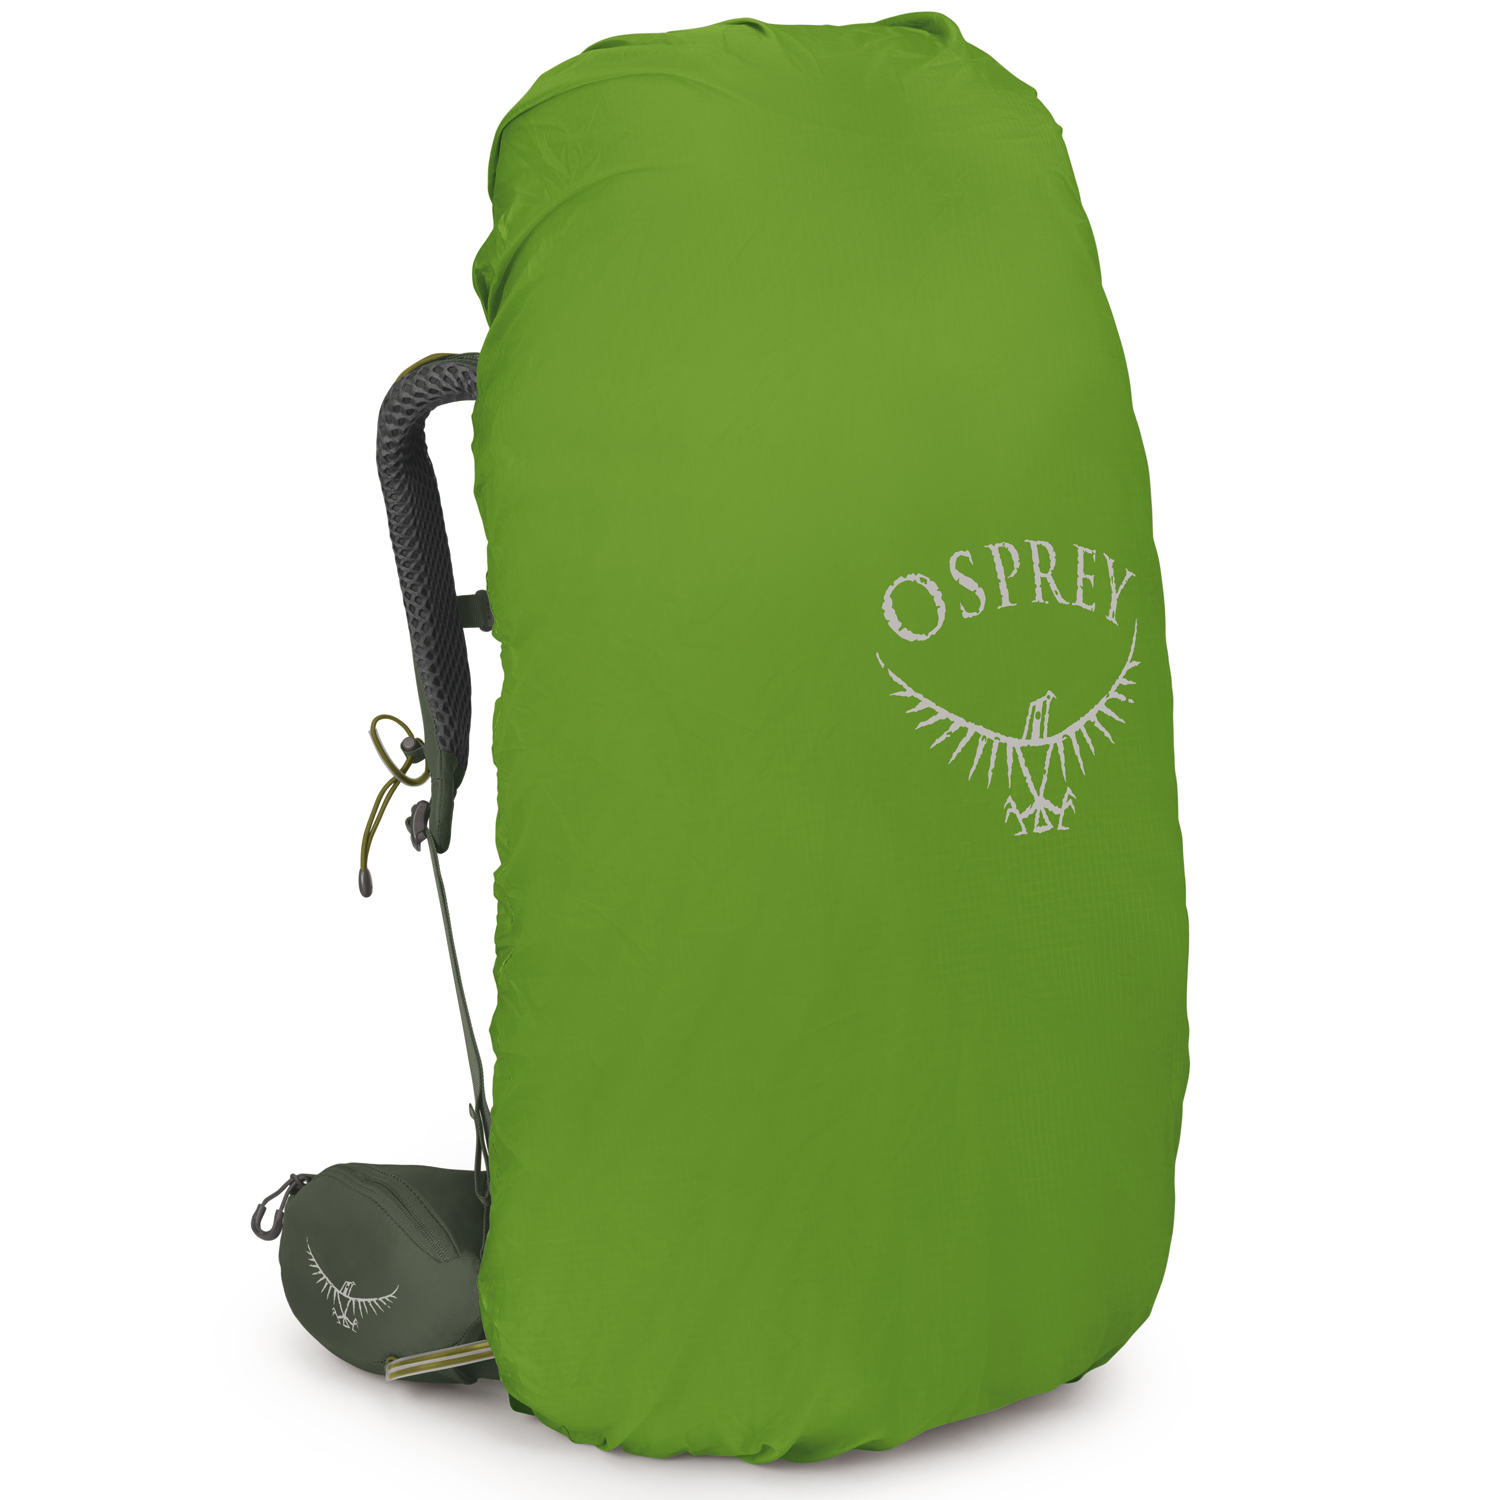 OSPREY Trekking/Wanderrucksack S/M Kestrel 58 Bonsai Green